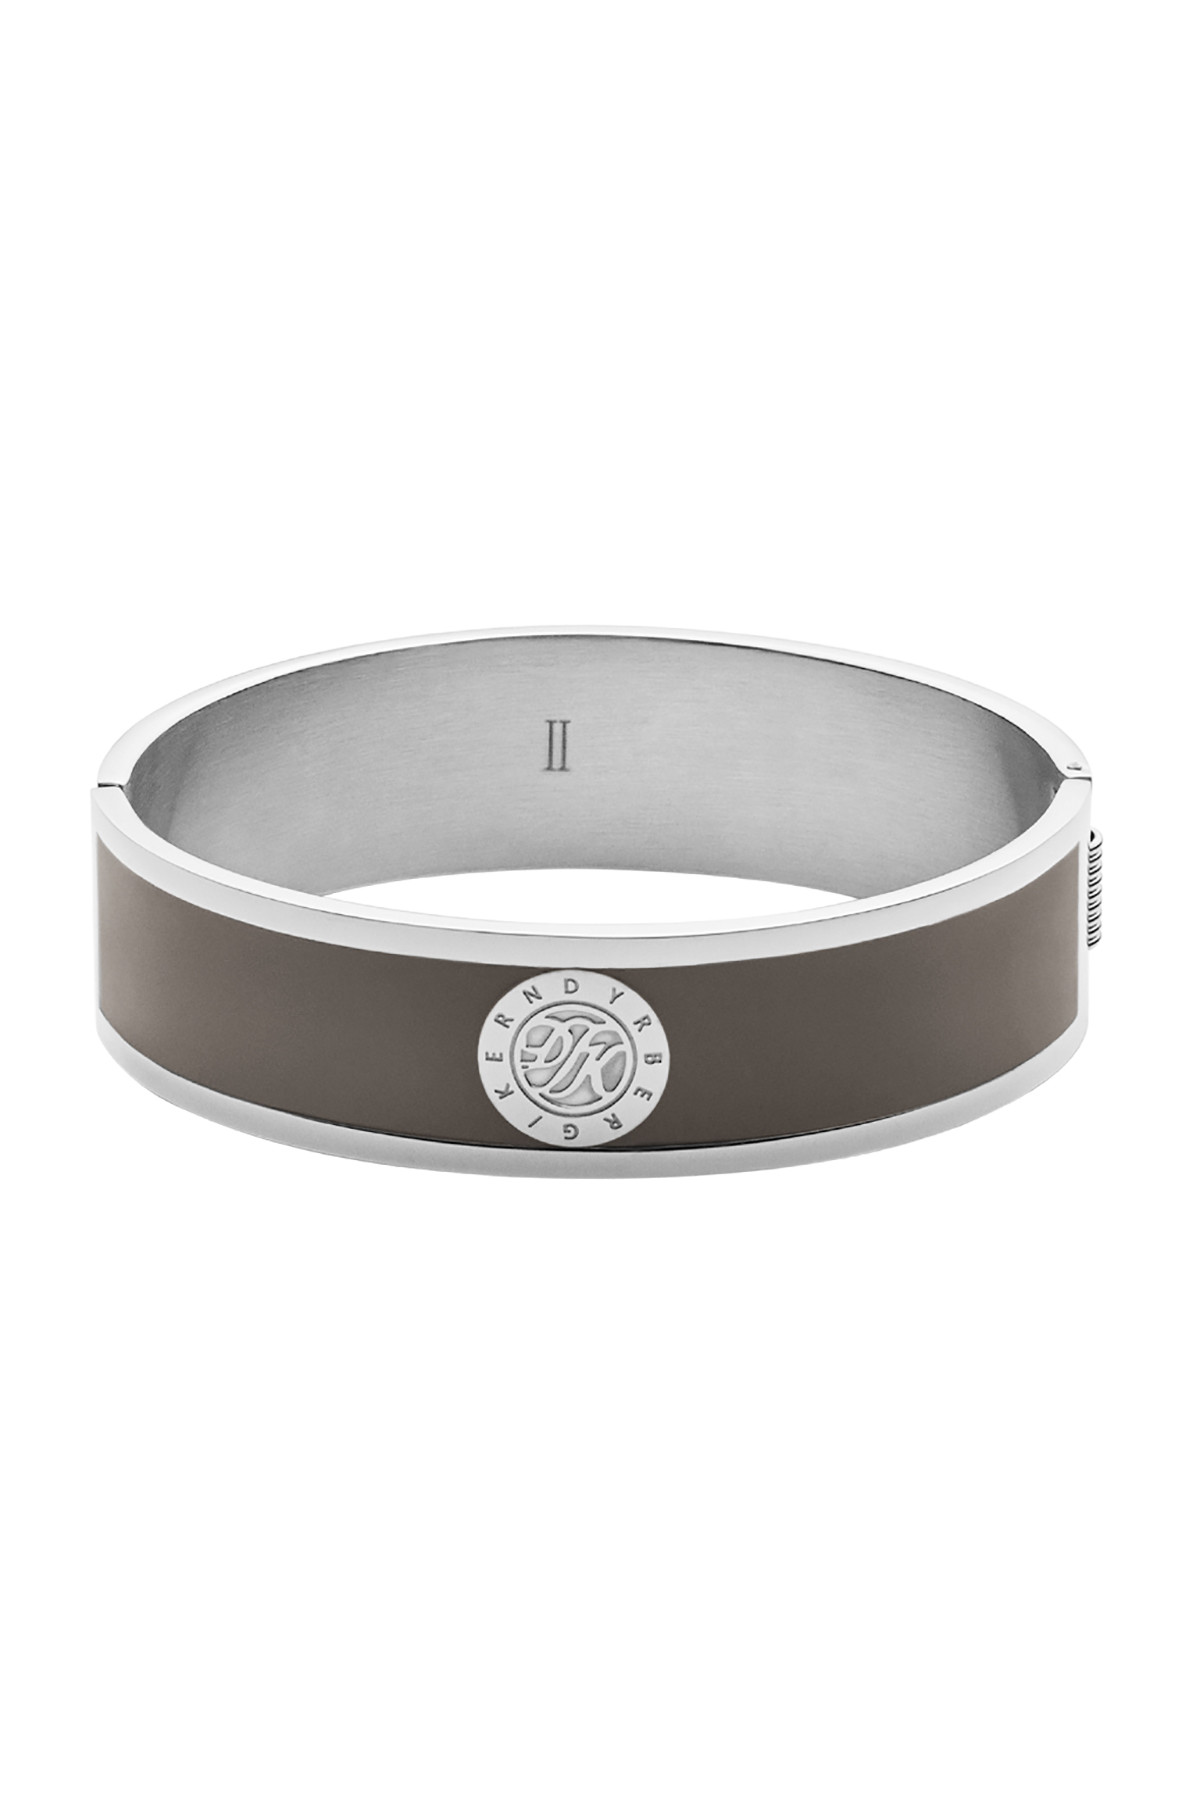 Dyrberg/Kern Jovika Bracelet, Color: Silver/Grey, I, Women